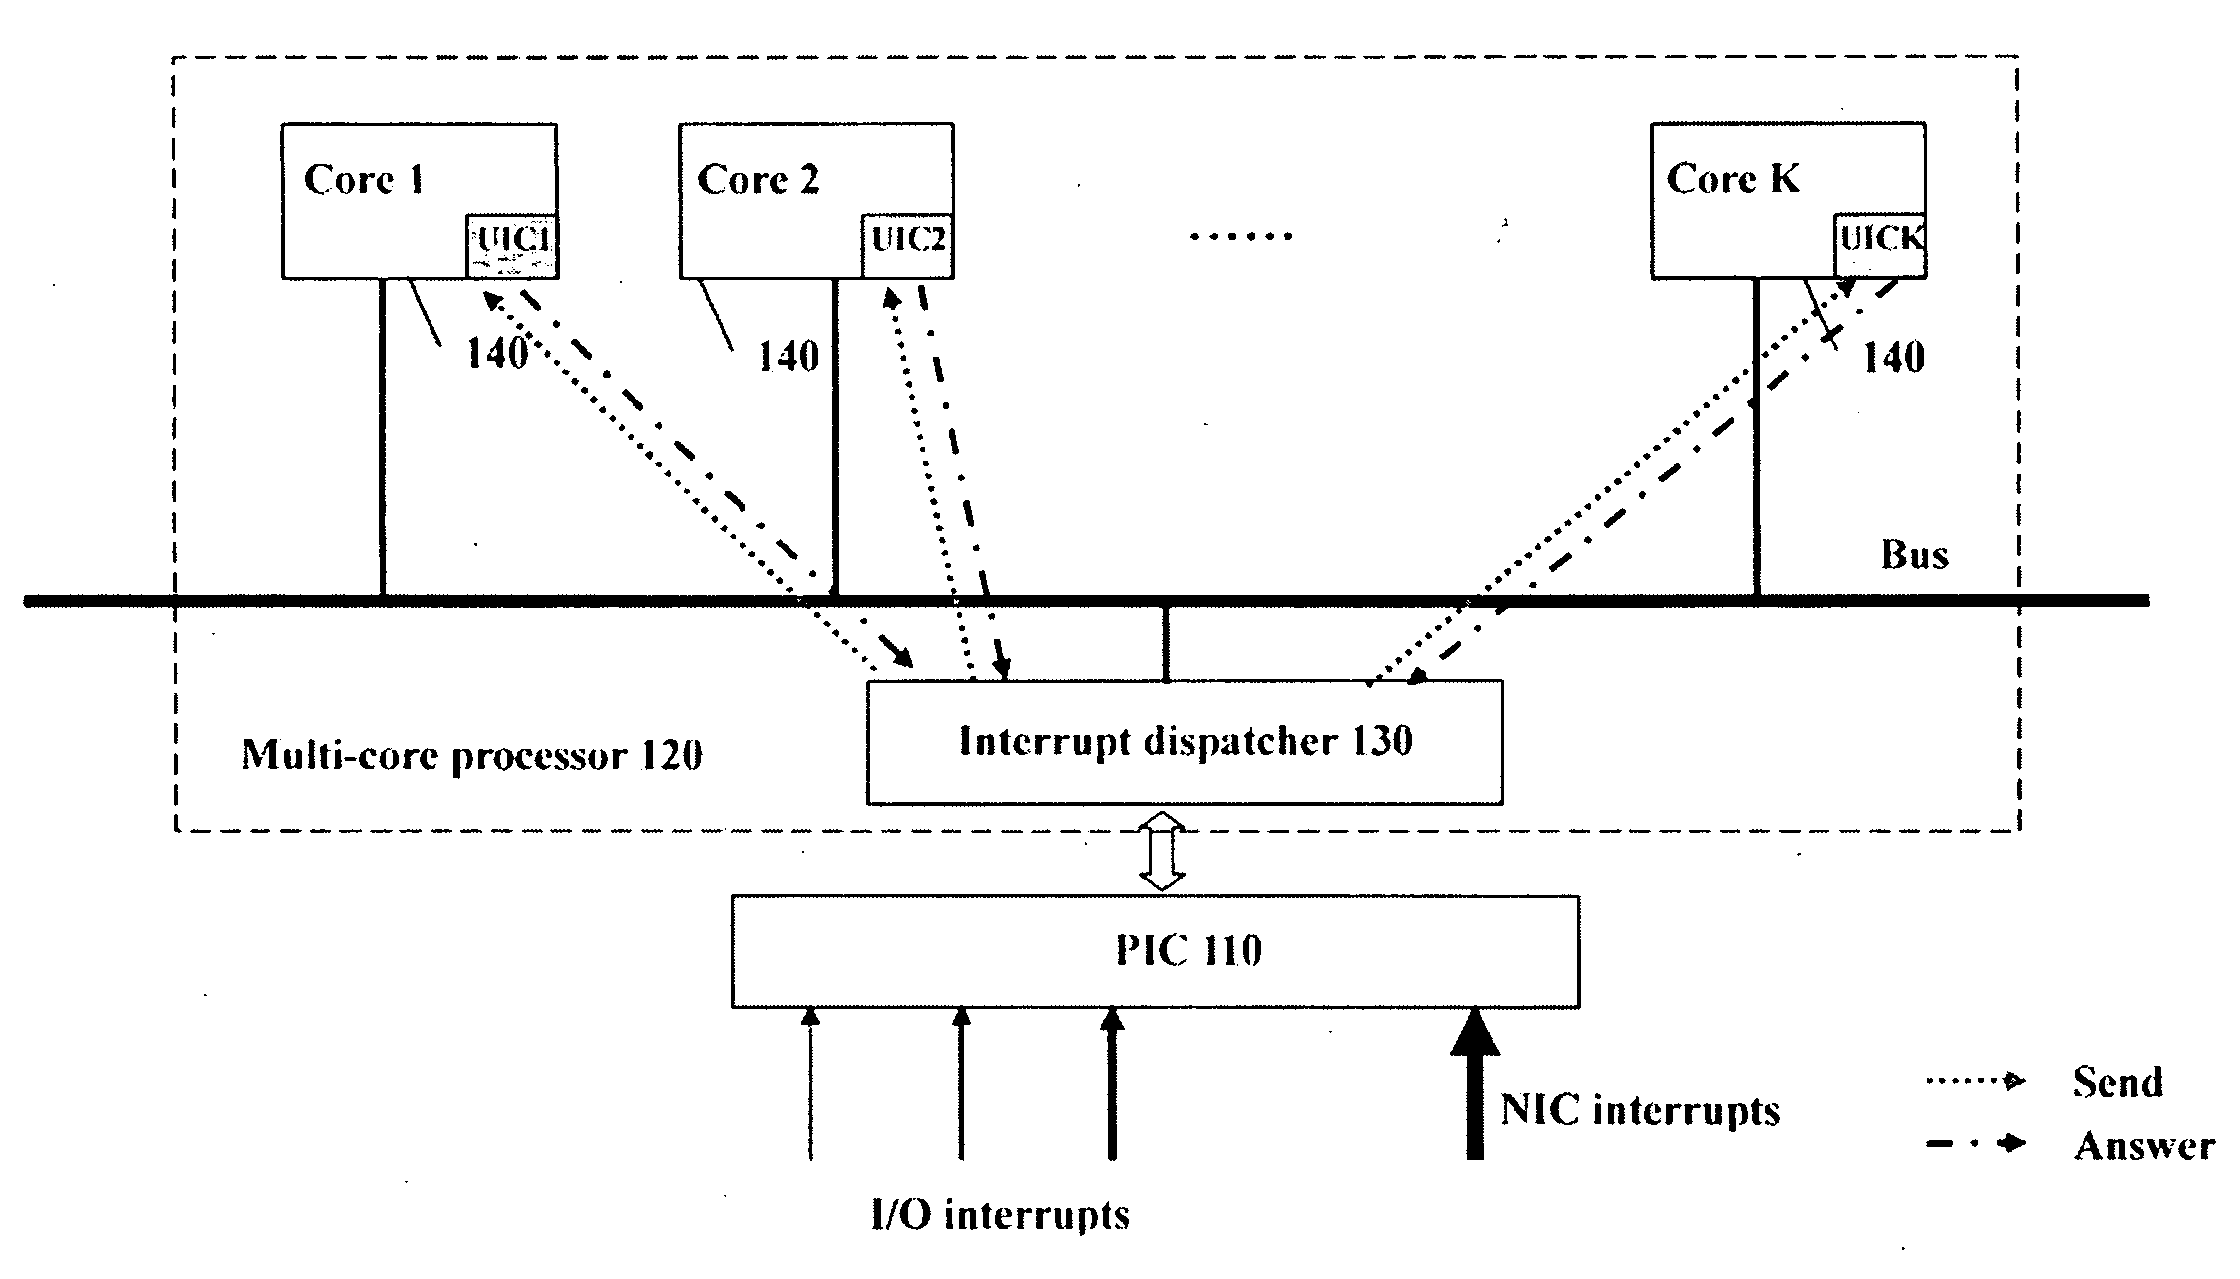 Interrupt dispatching method in multi-core environment and multi-core processor